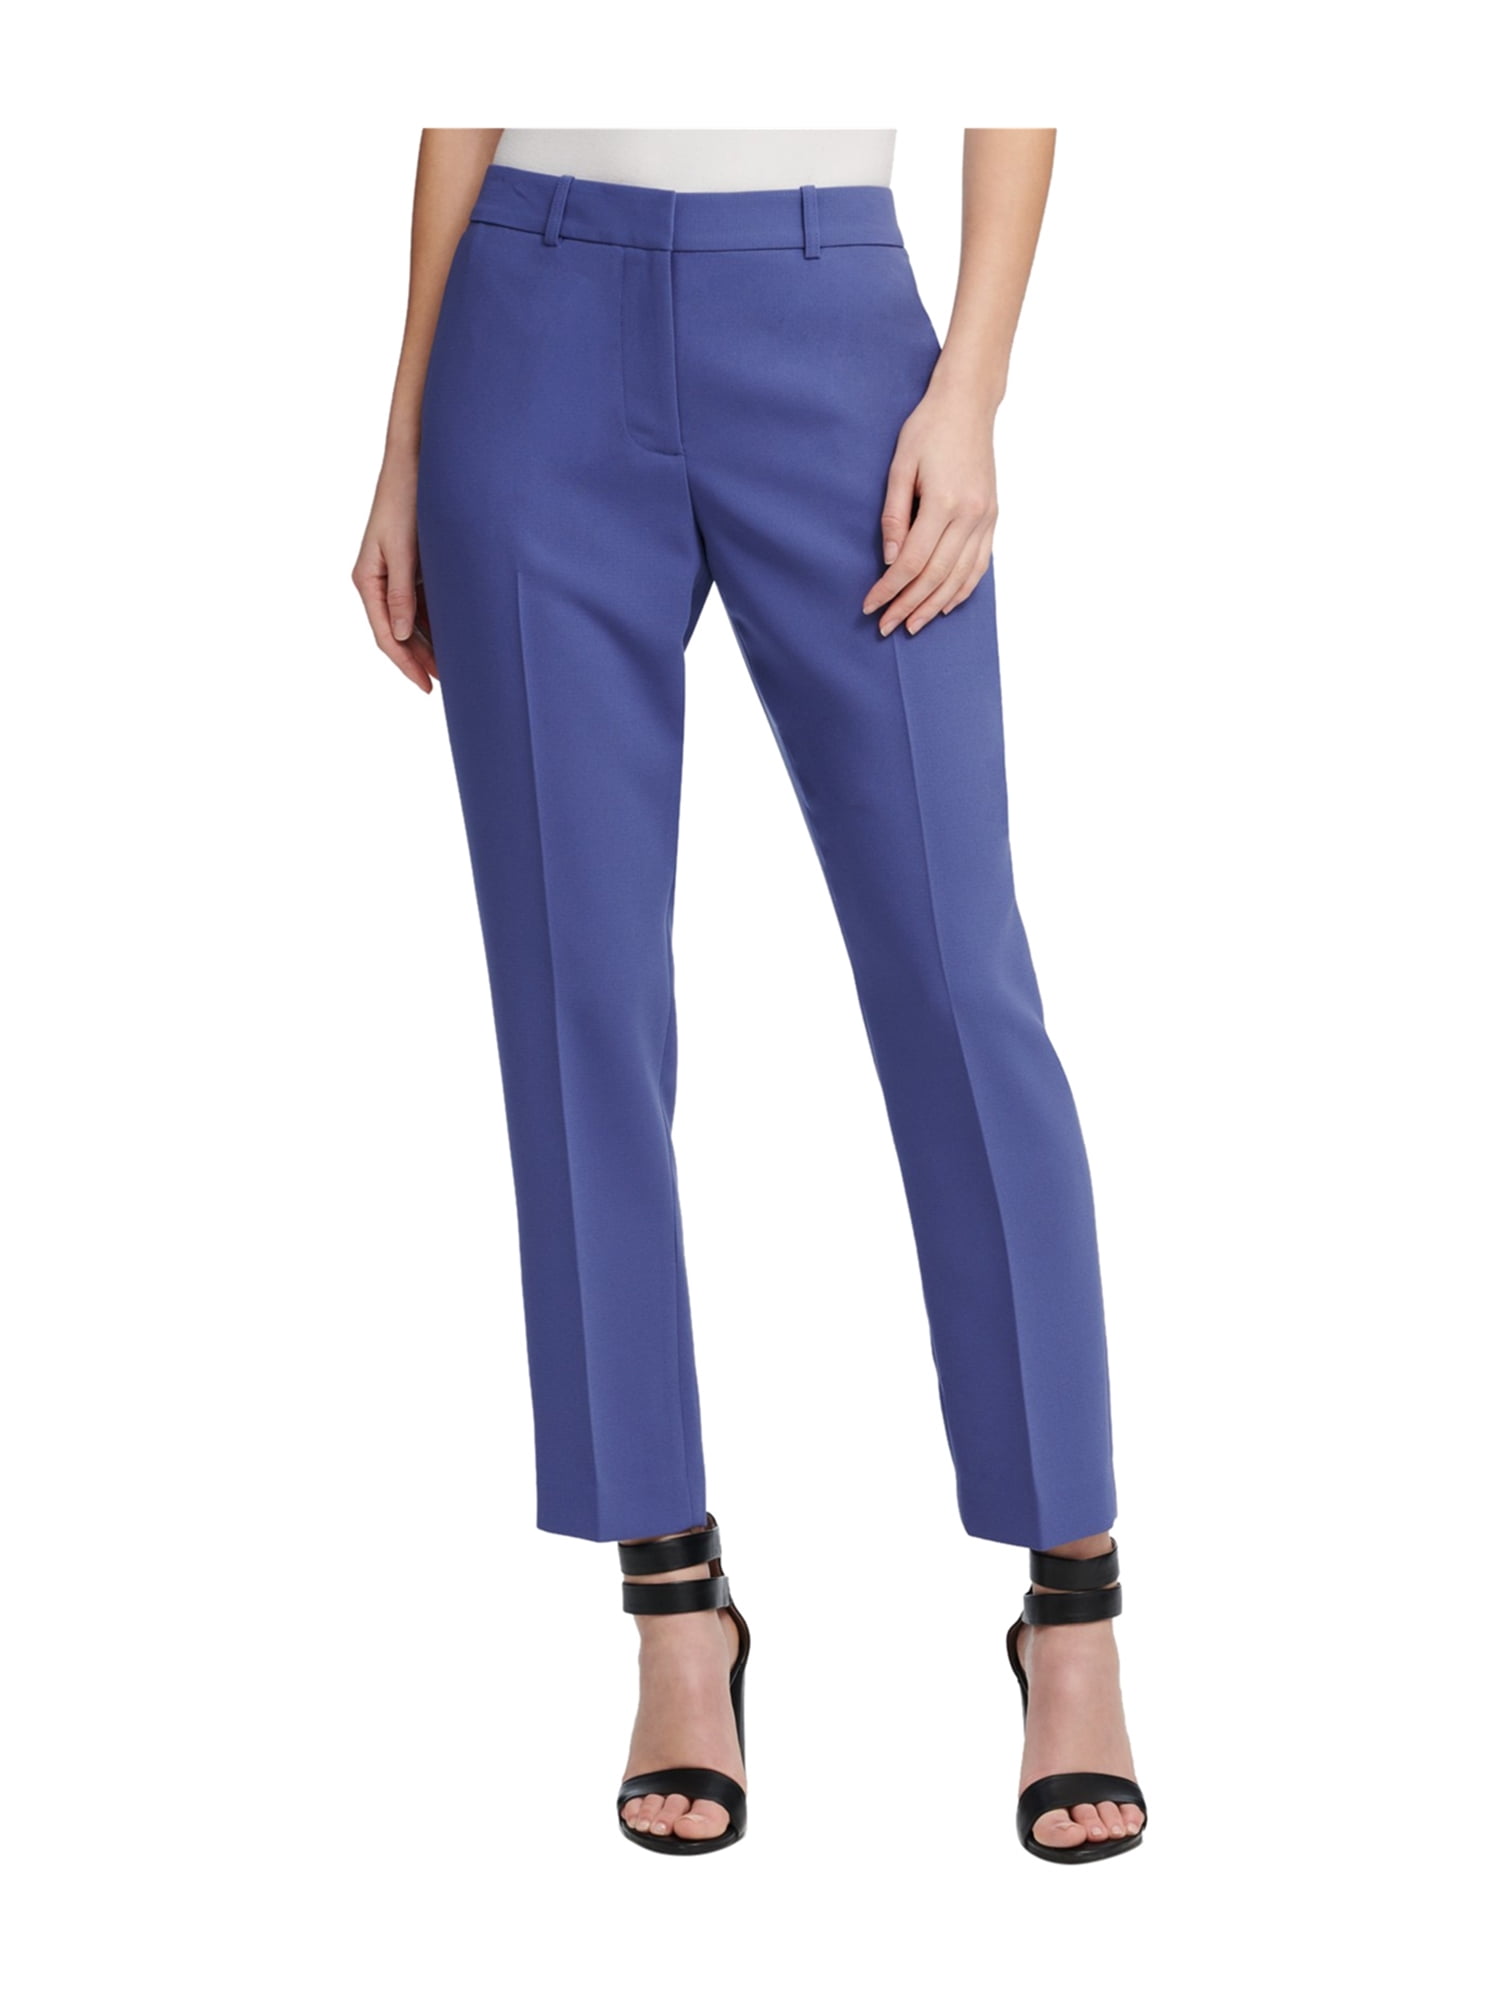 DKNY Womens Solid Casual Trouser Pants blu 6x28 | Walmart Canada